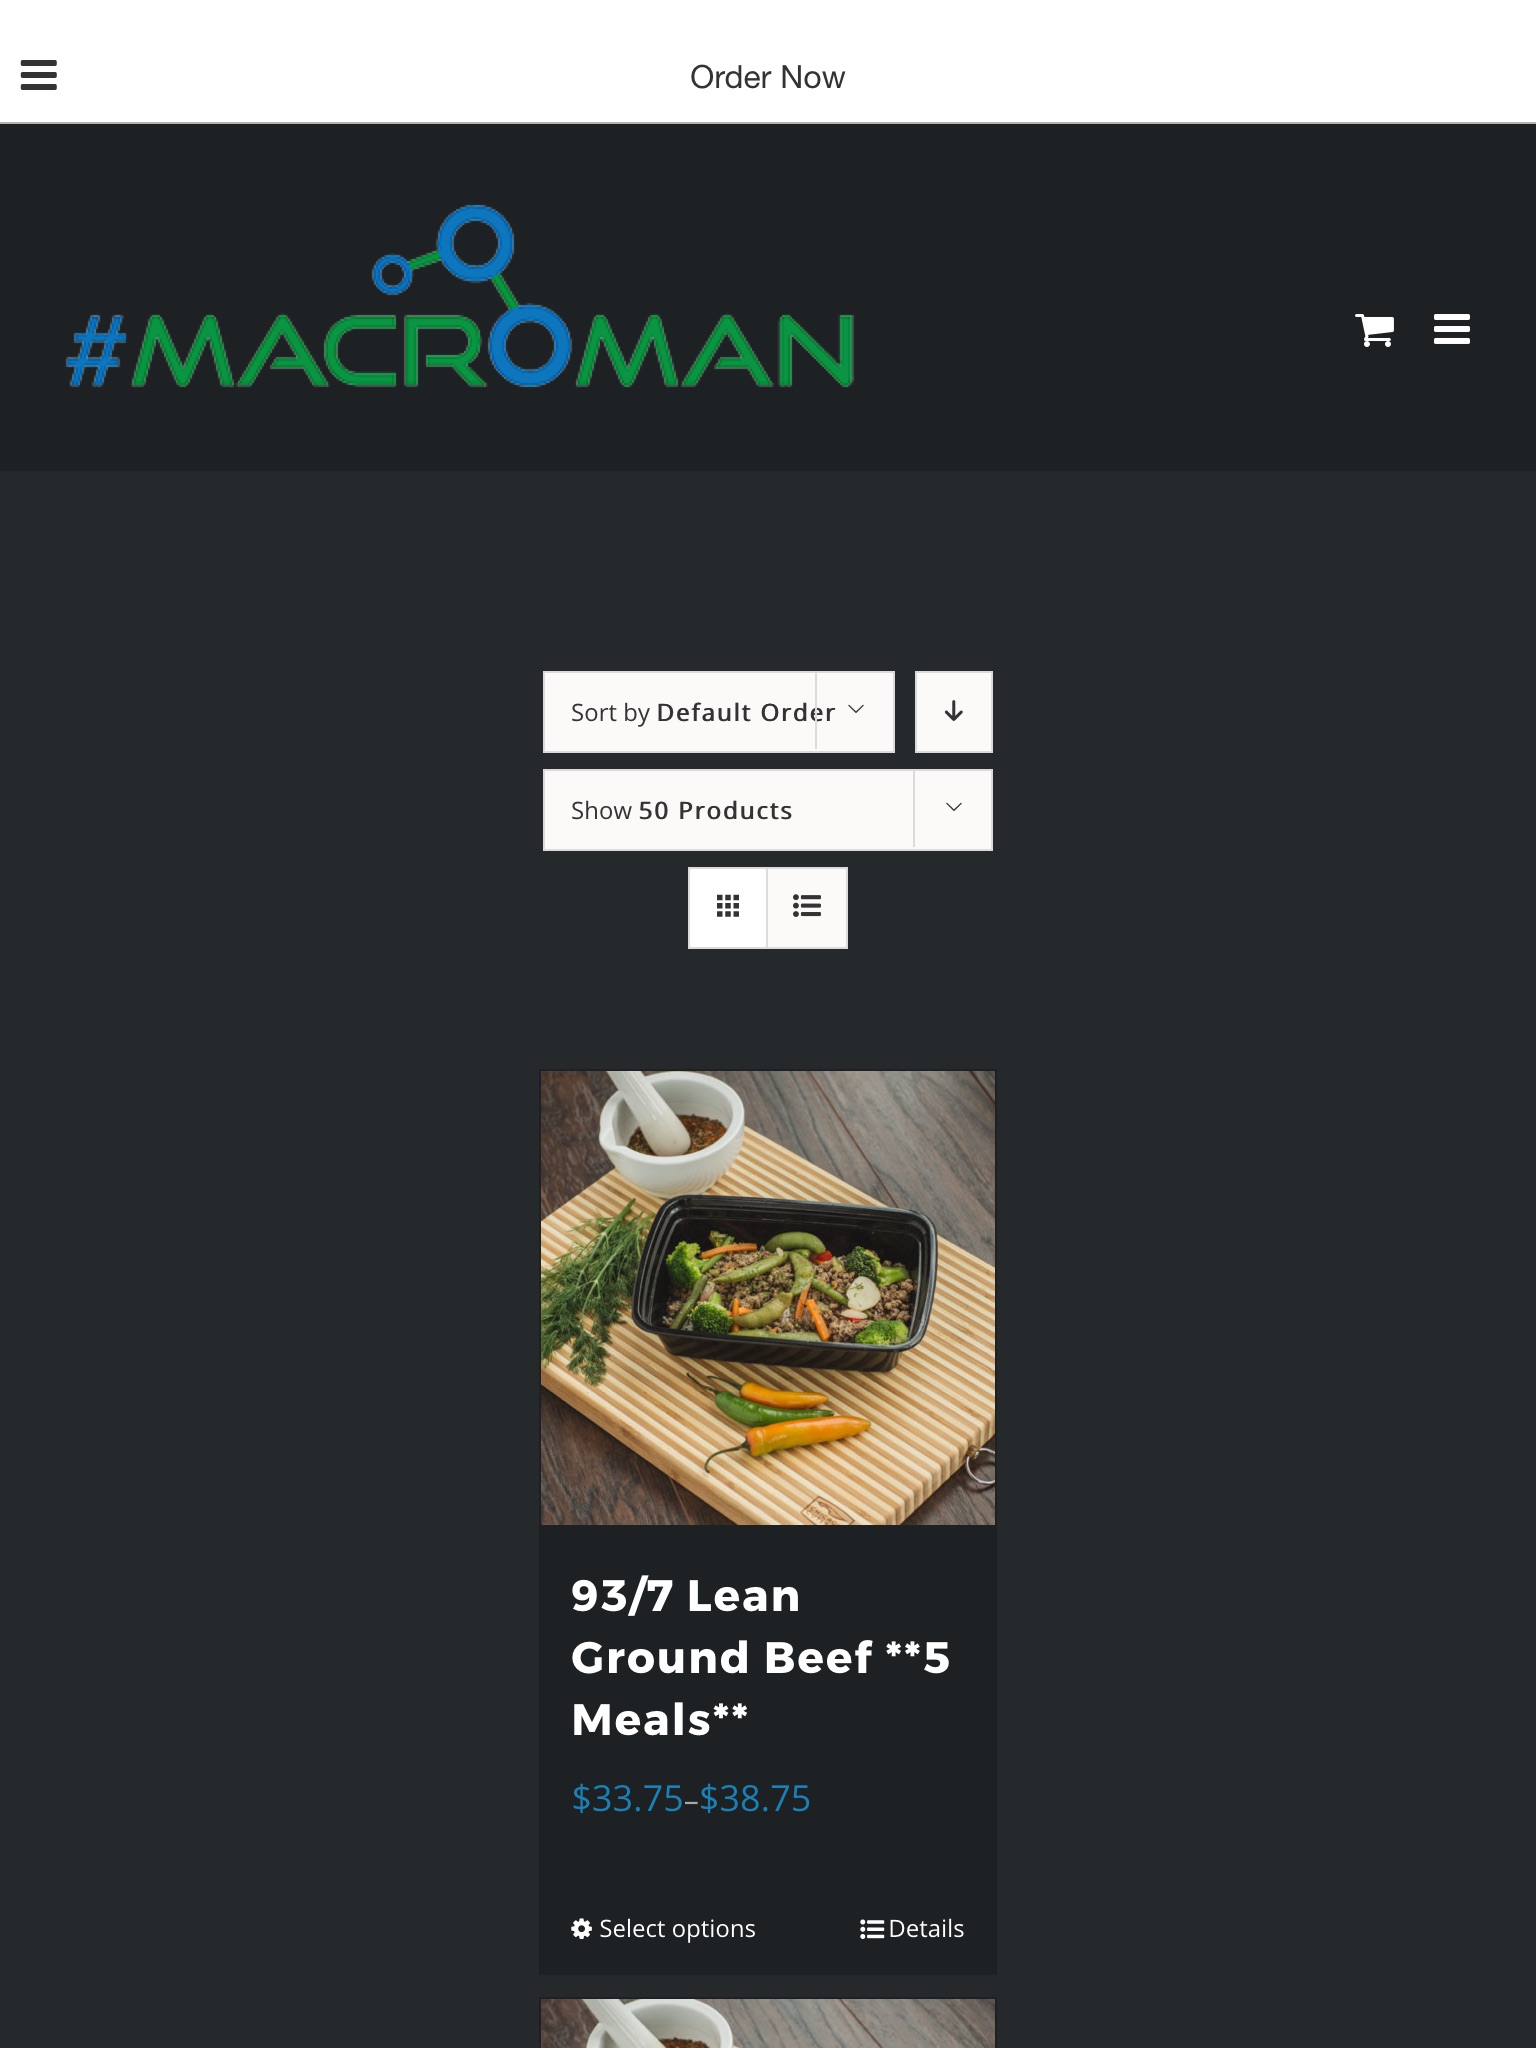 Macroman Meals - Custom Meal Prep Services screenshot 2